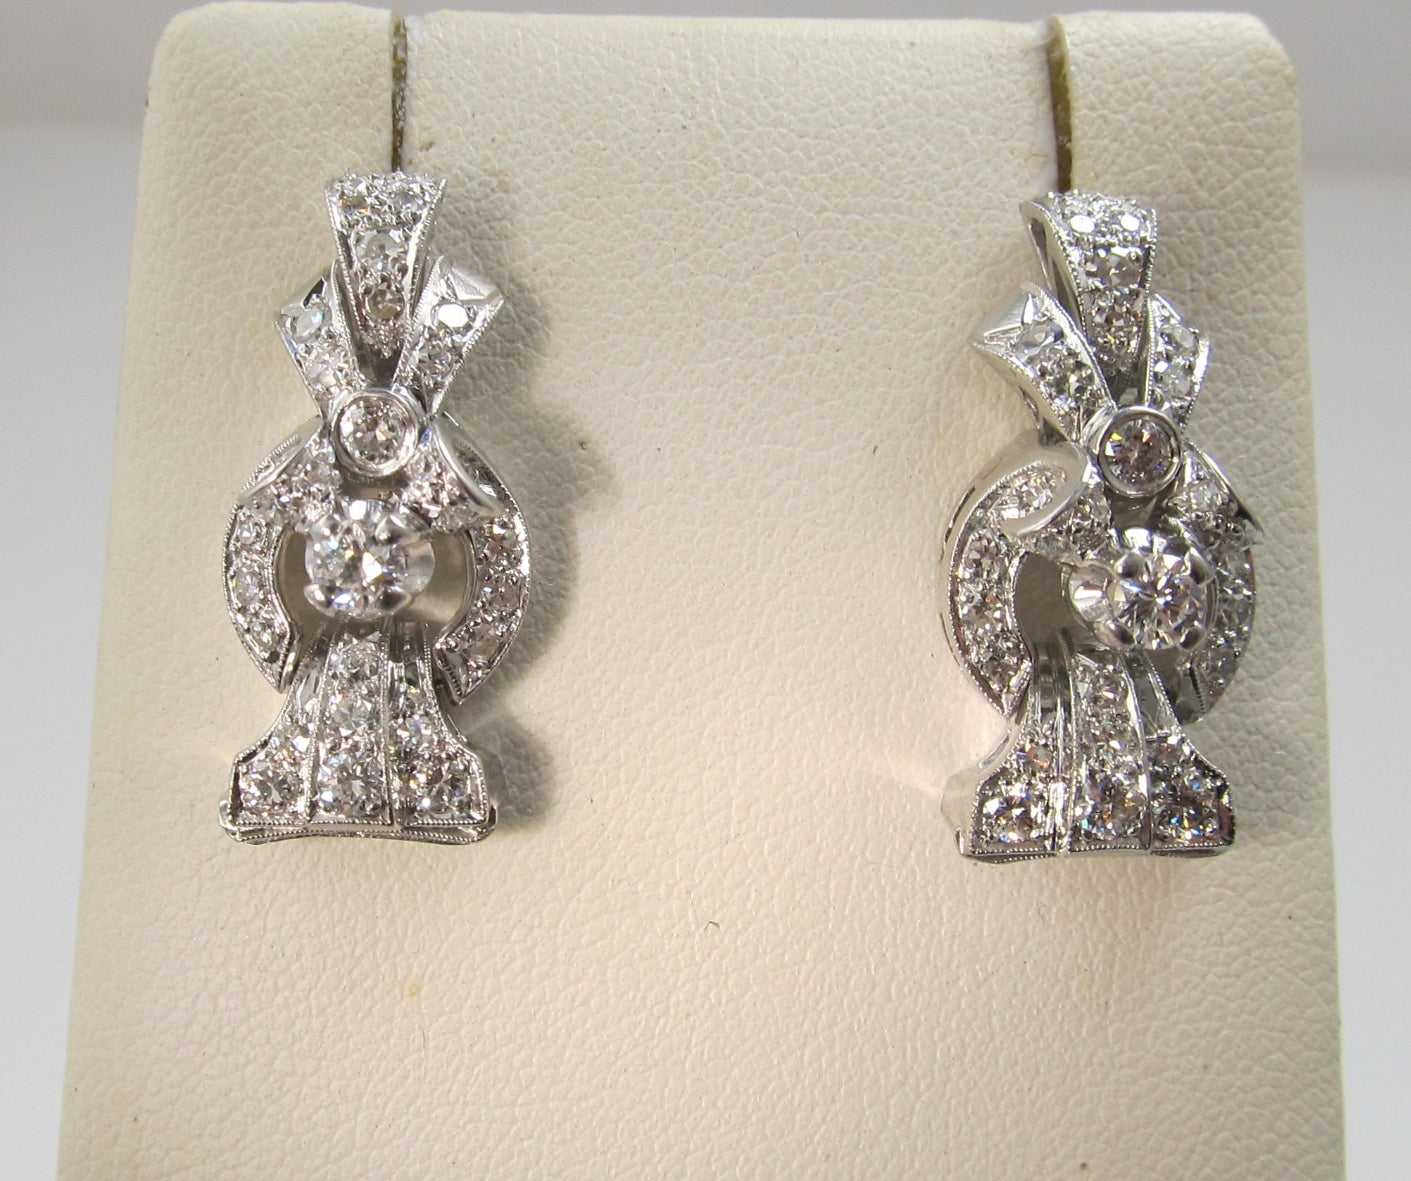 Vintage platinum diamond earrings, Victorious Cape May